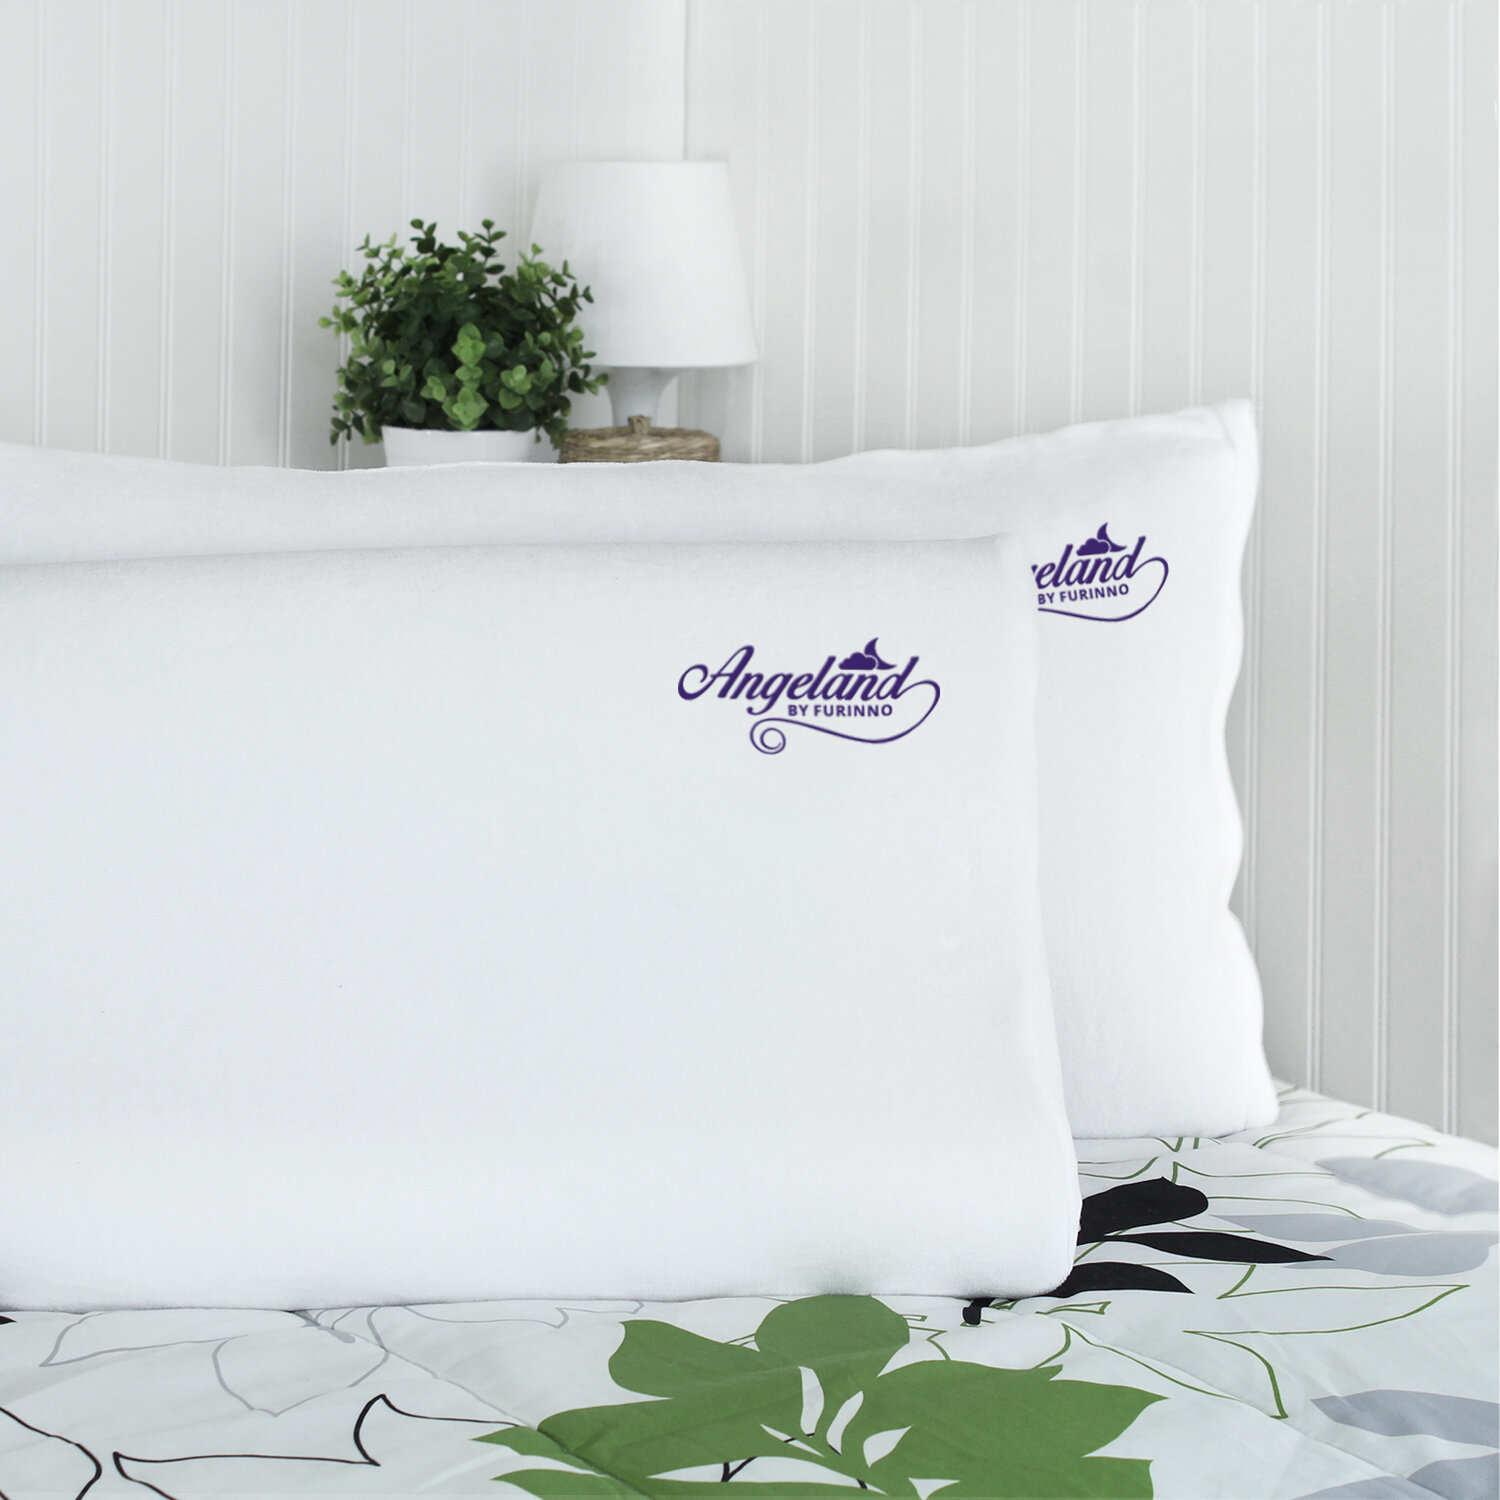 Bedsure USA9H6CW1ST Contour Memory Foam Pillow White for sale online 